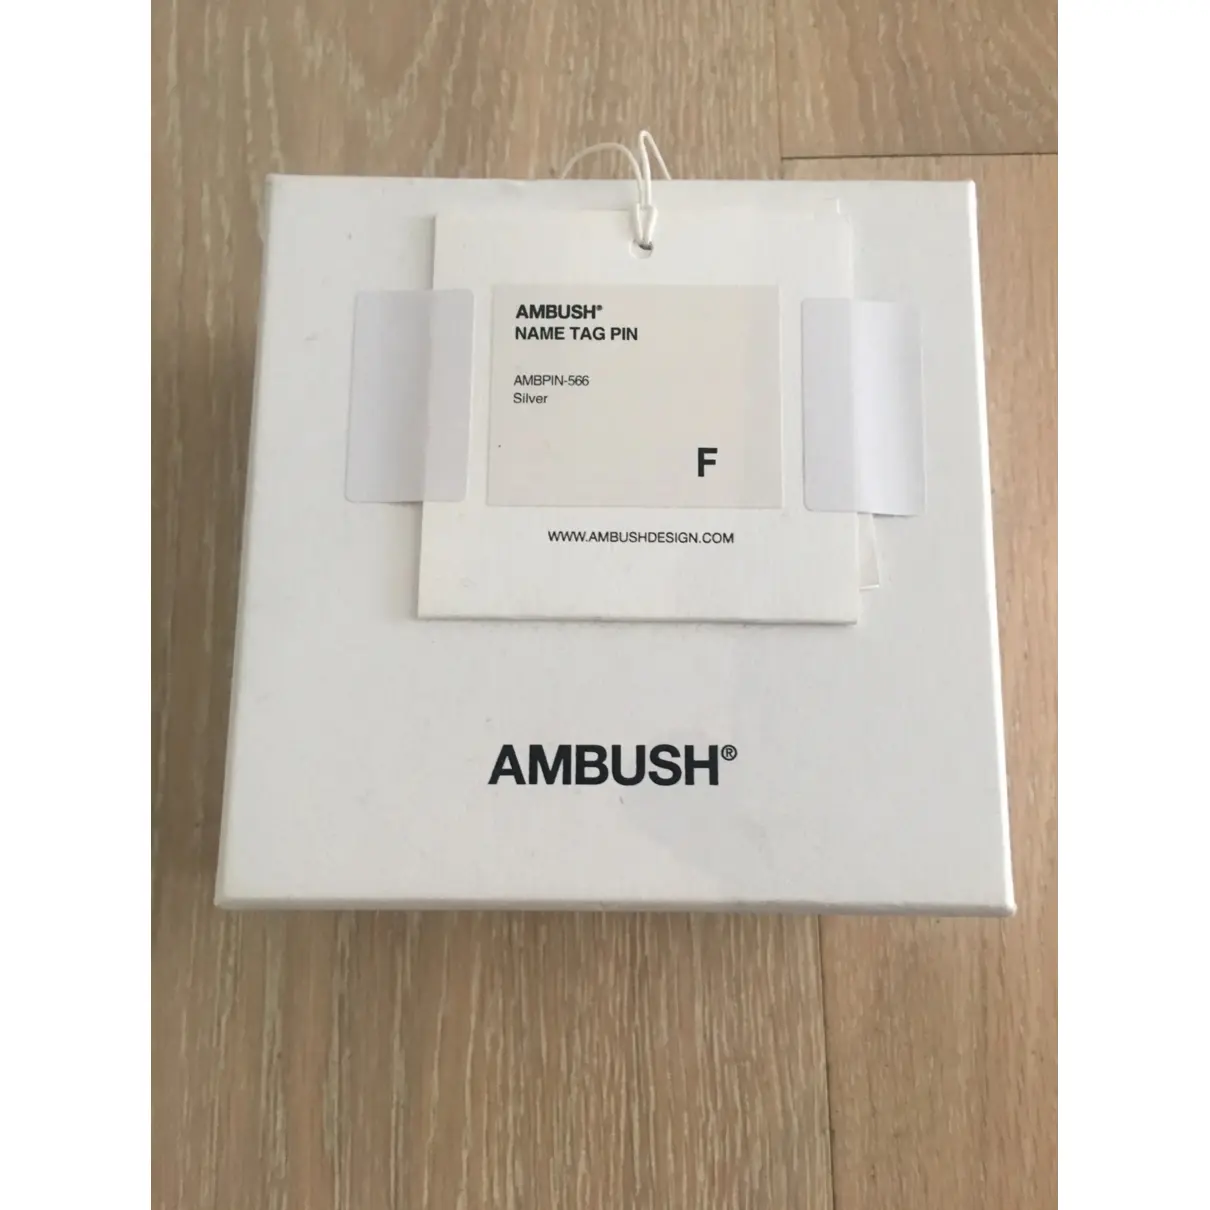 Buy AMBUSH Pin & brooche online